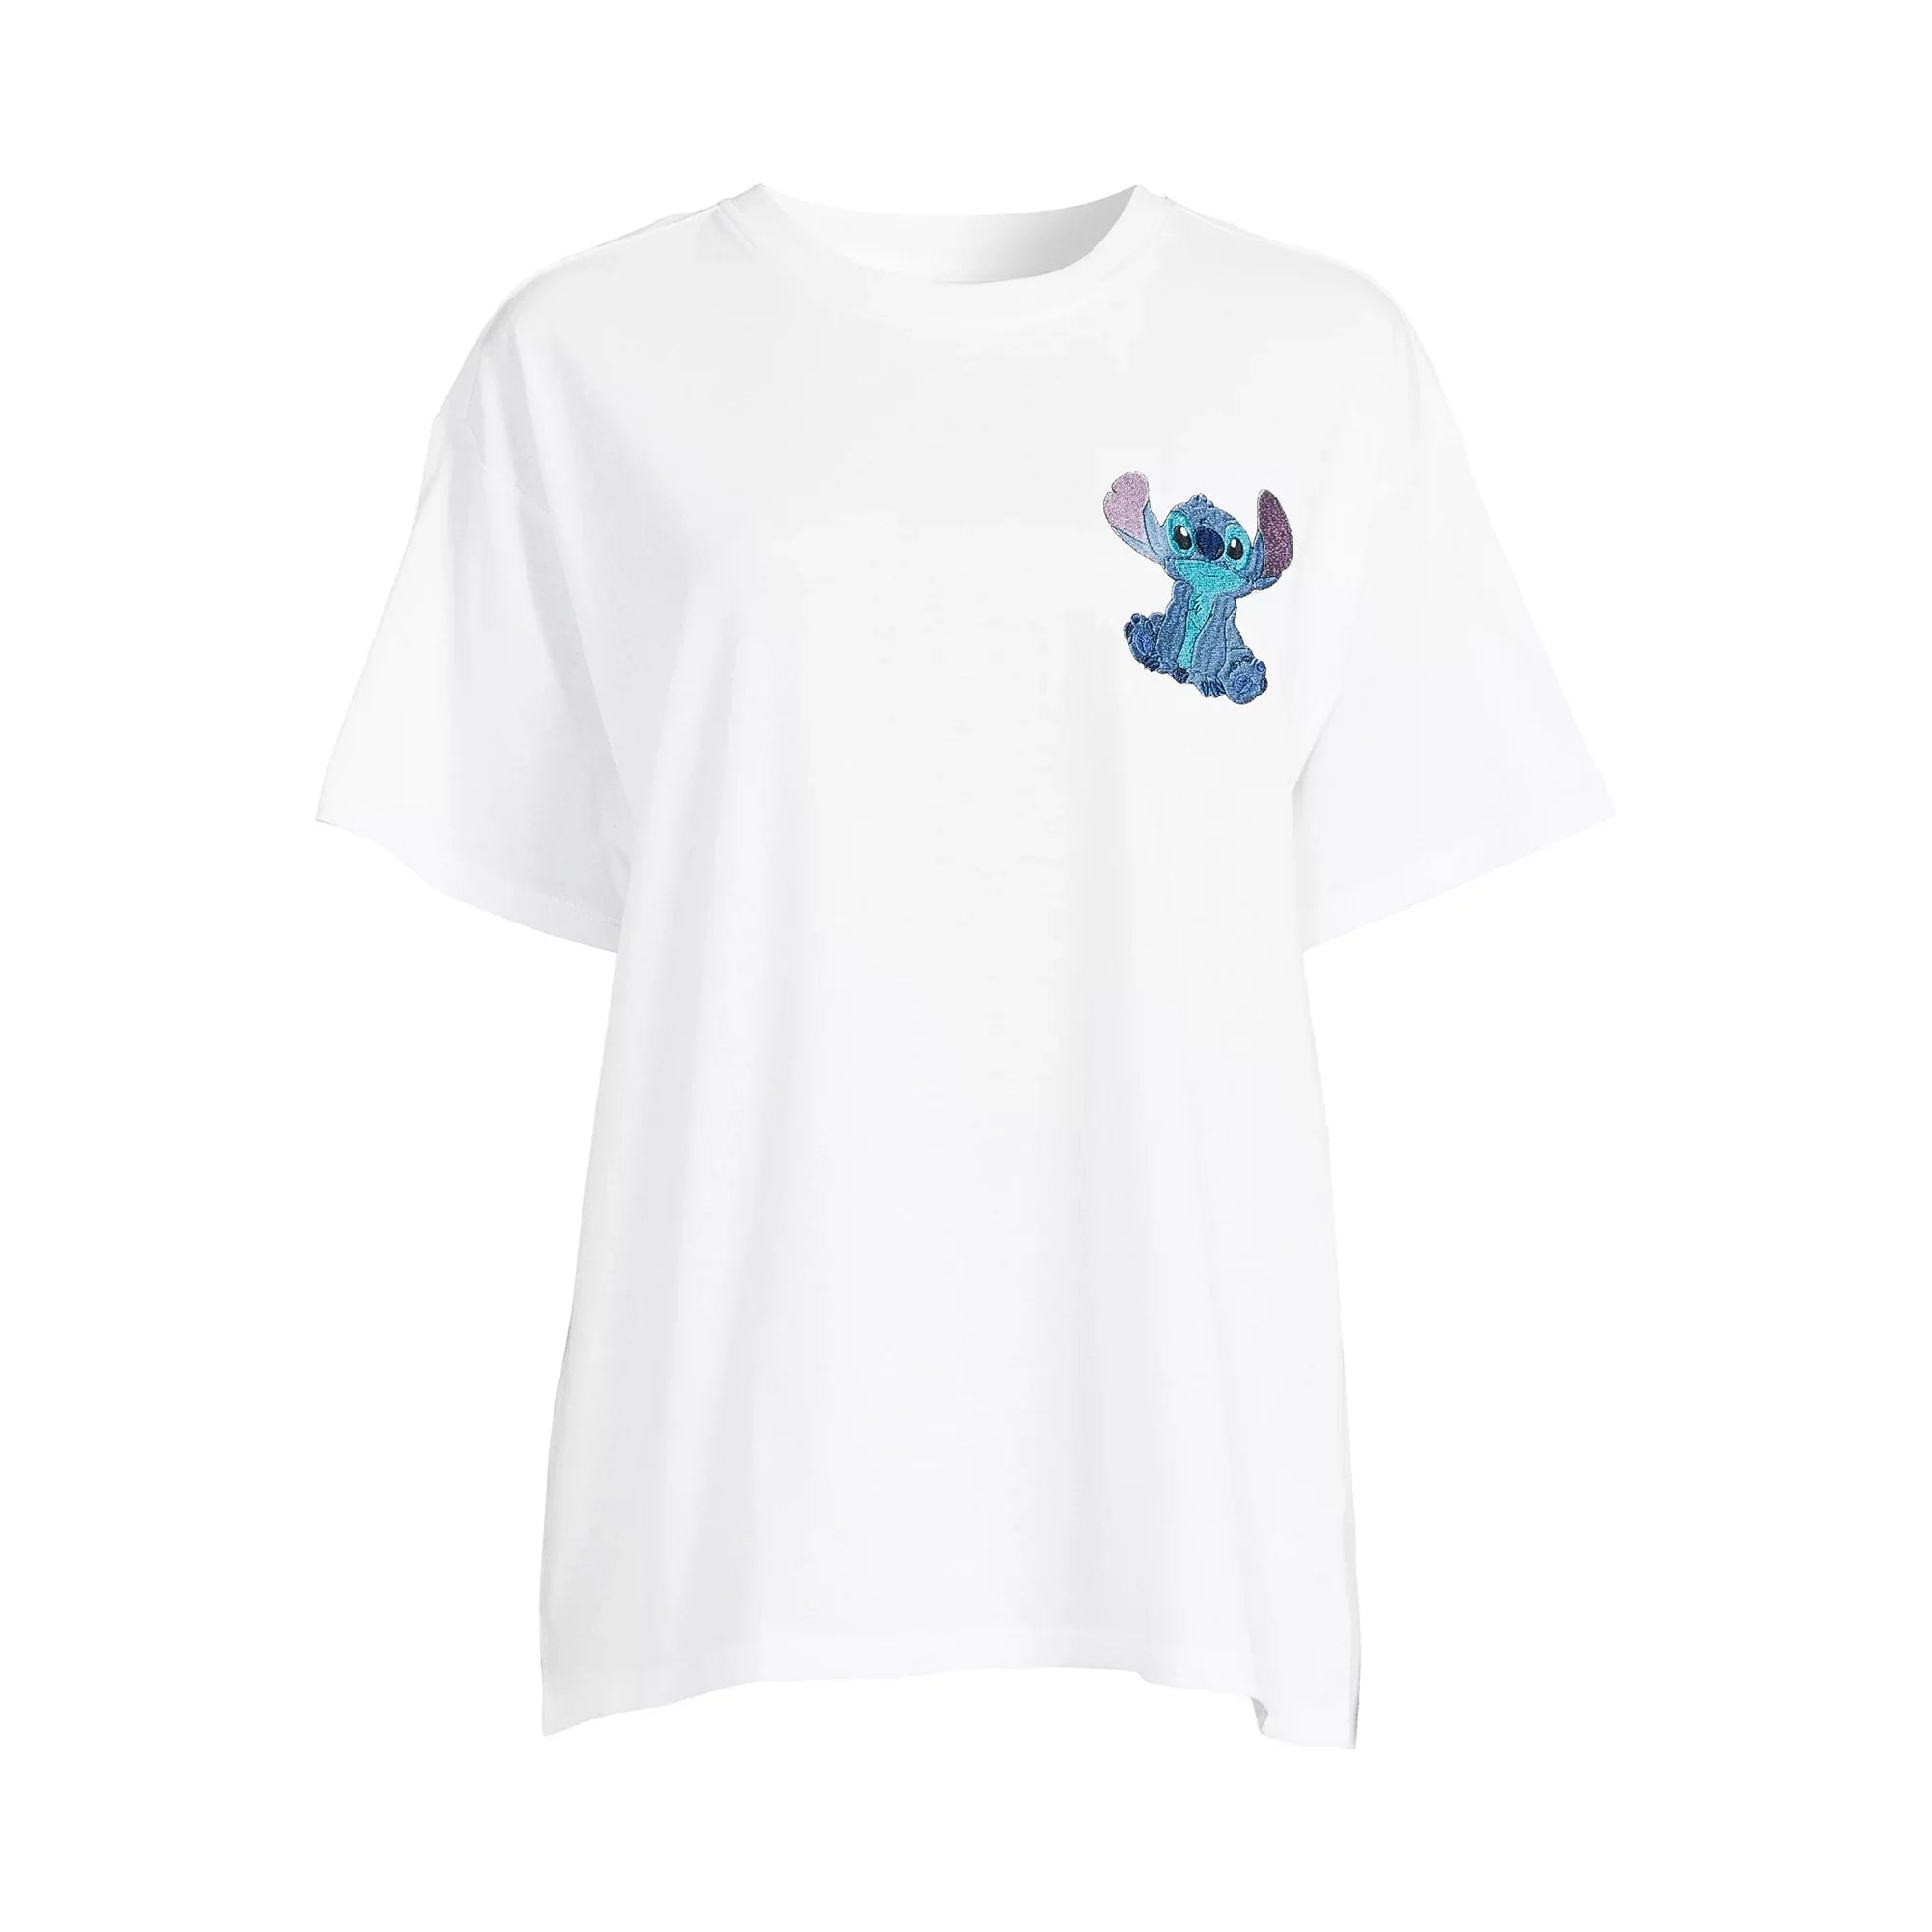 Disney Stitch Sunshine And Good Vibes Junior T-Shirt